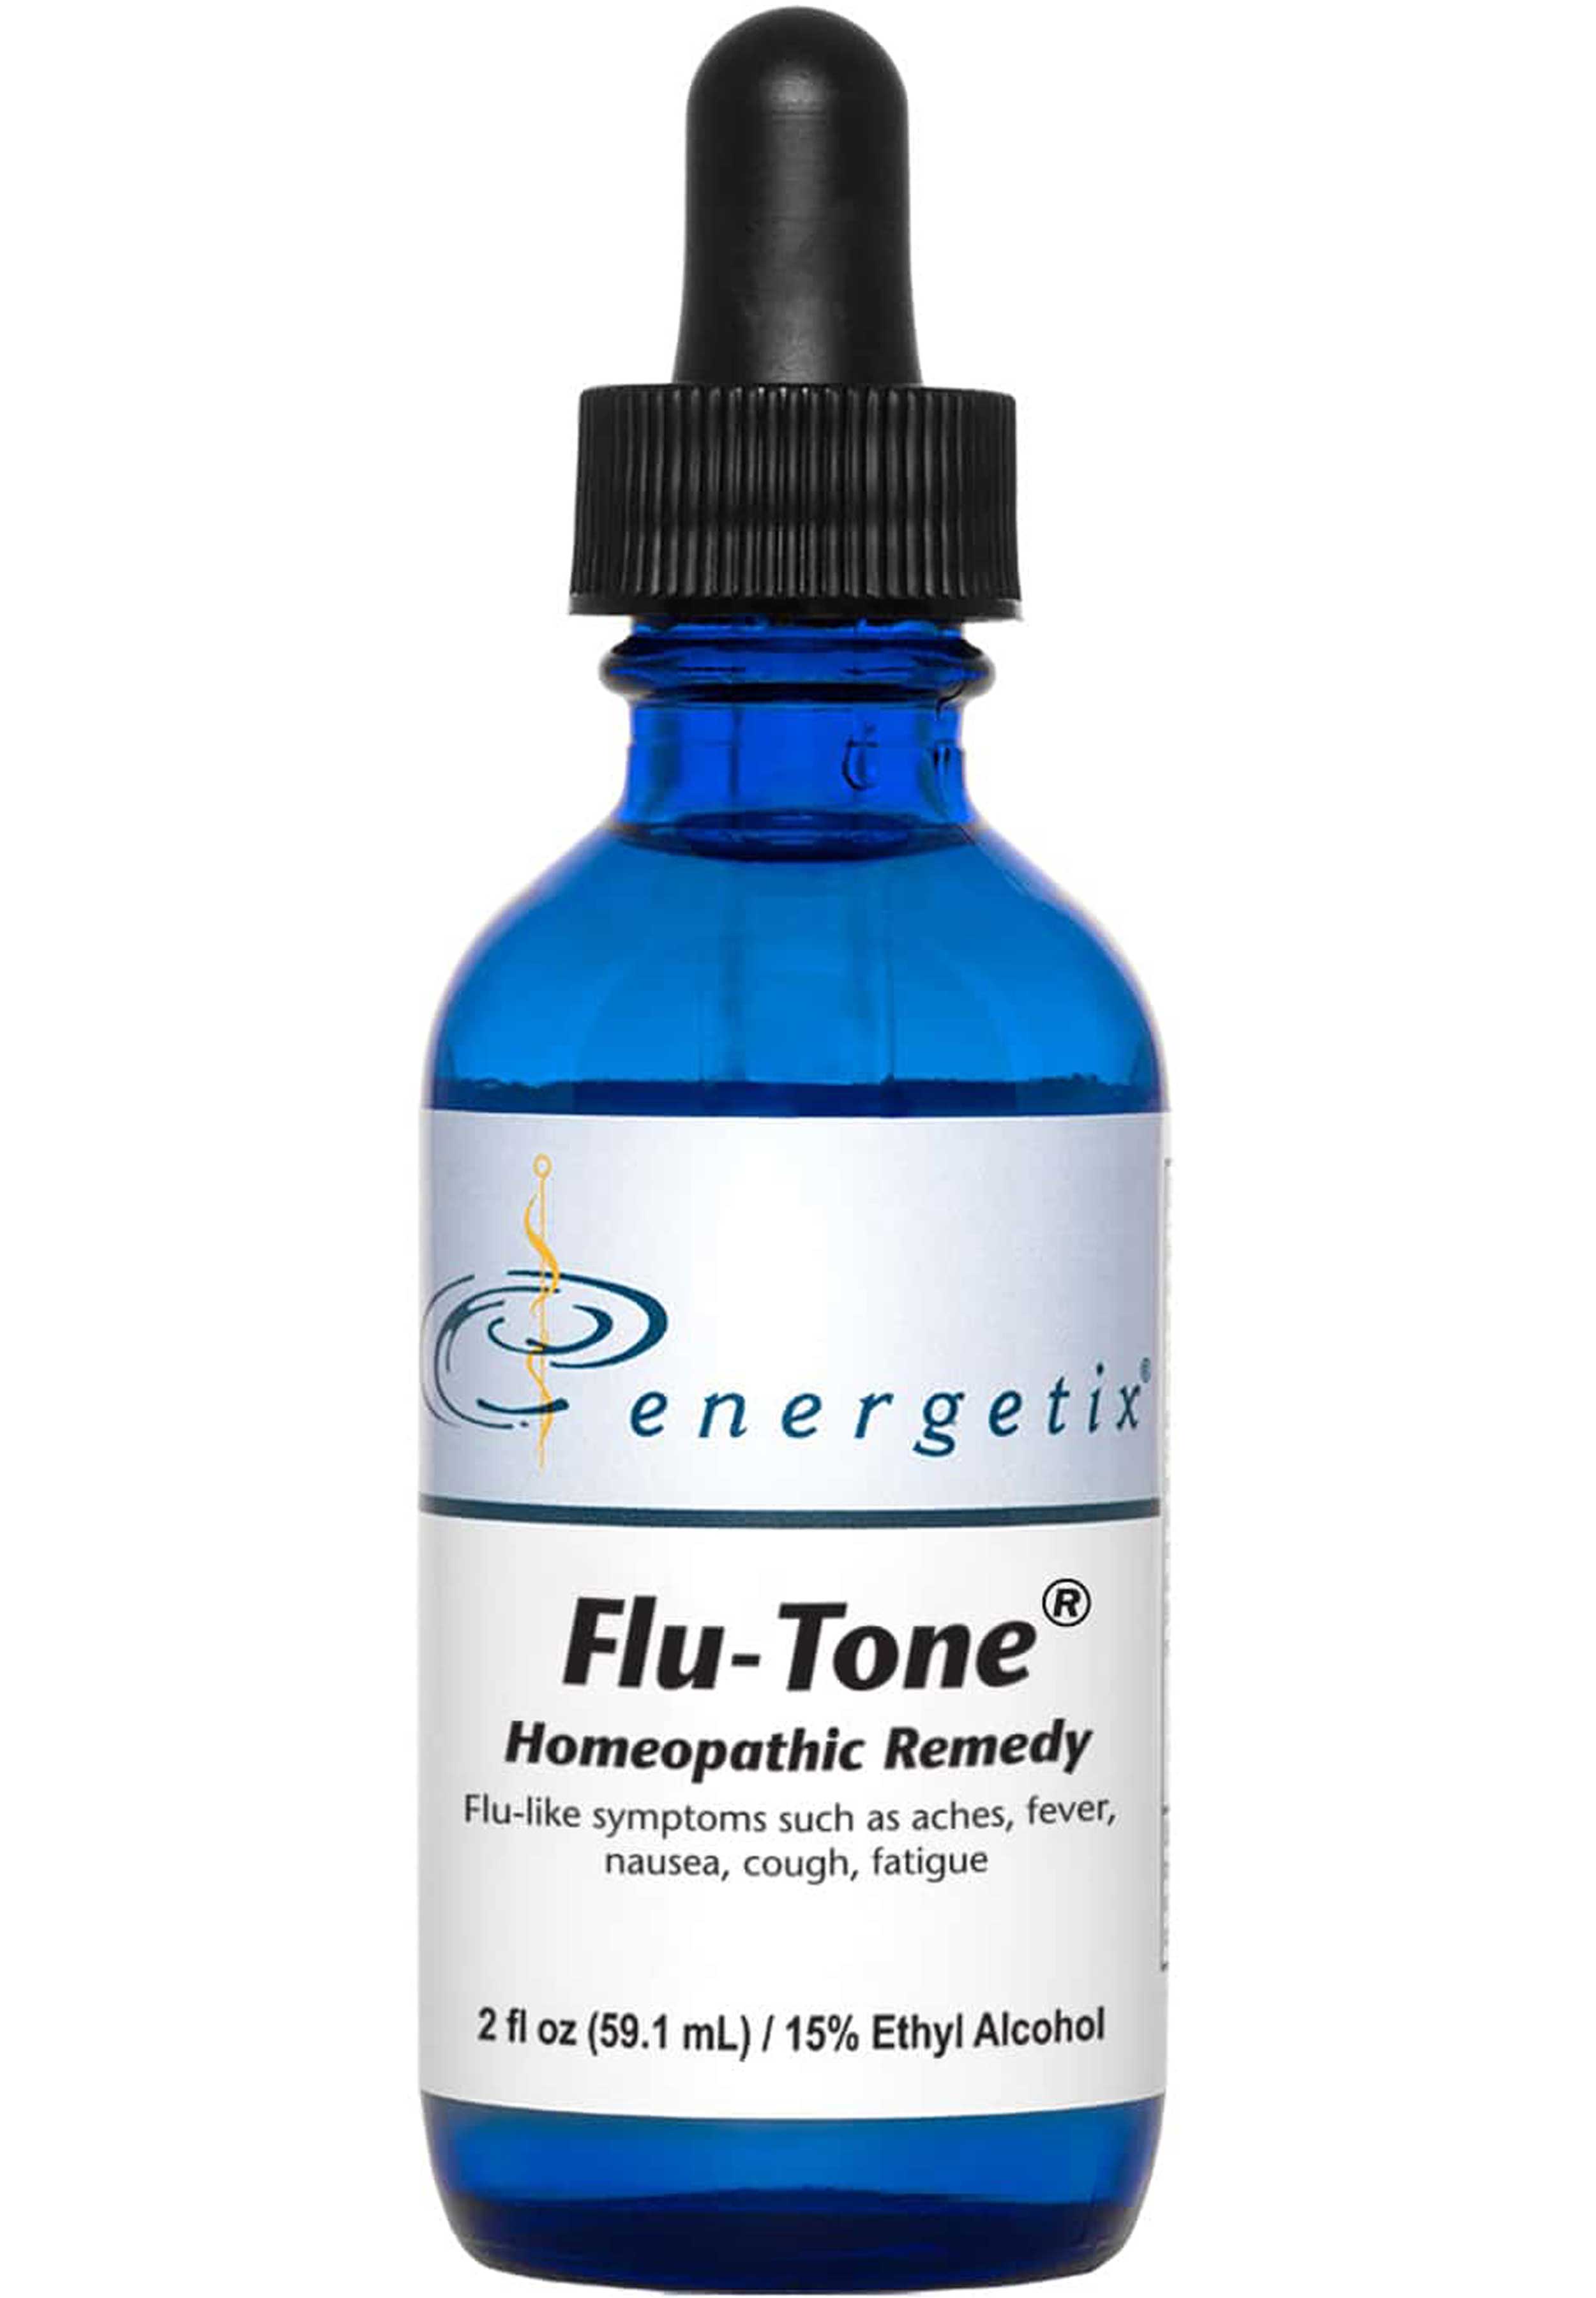 Energetix Flu-Tone